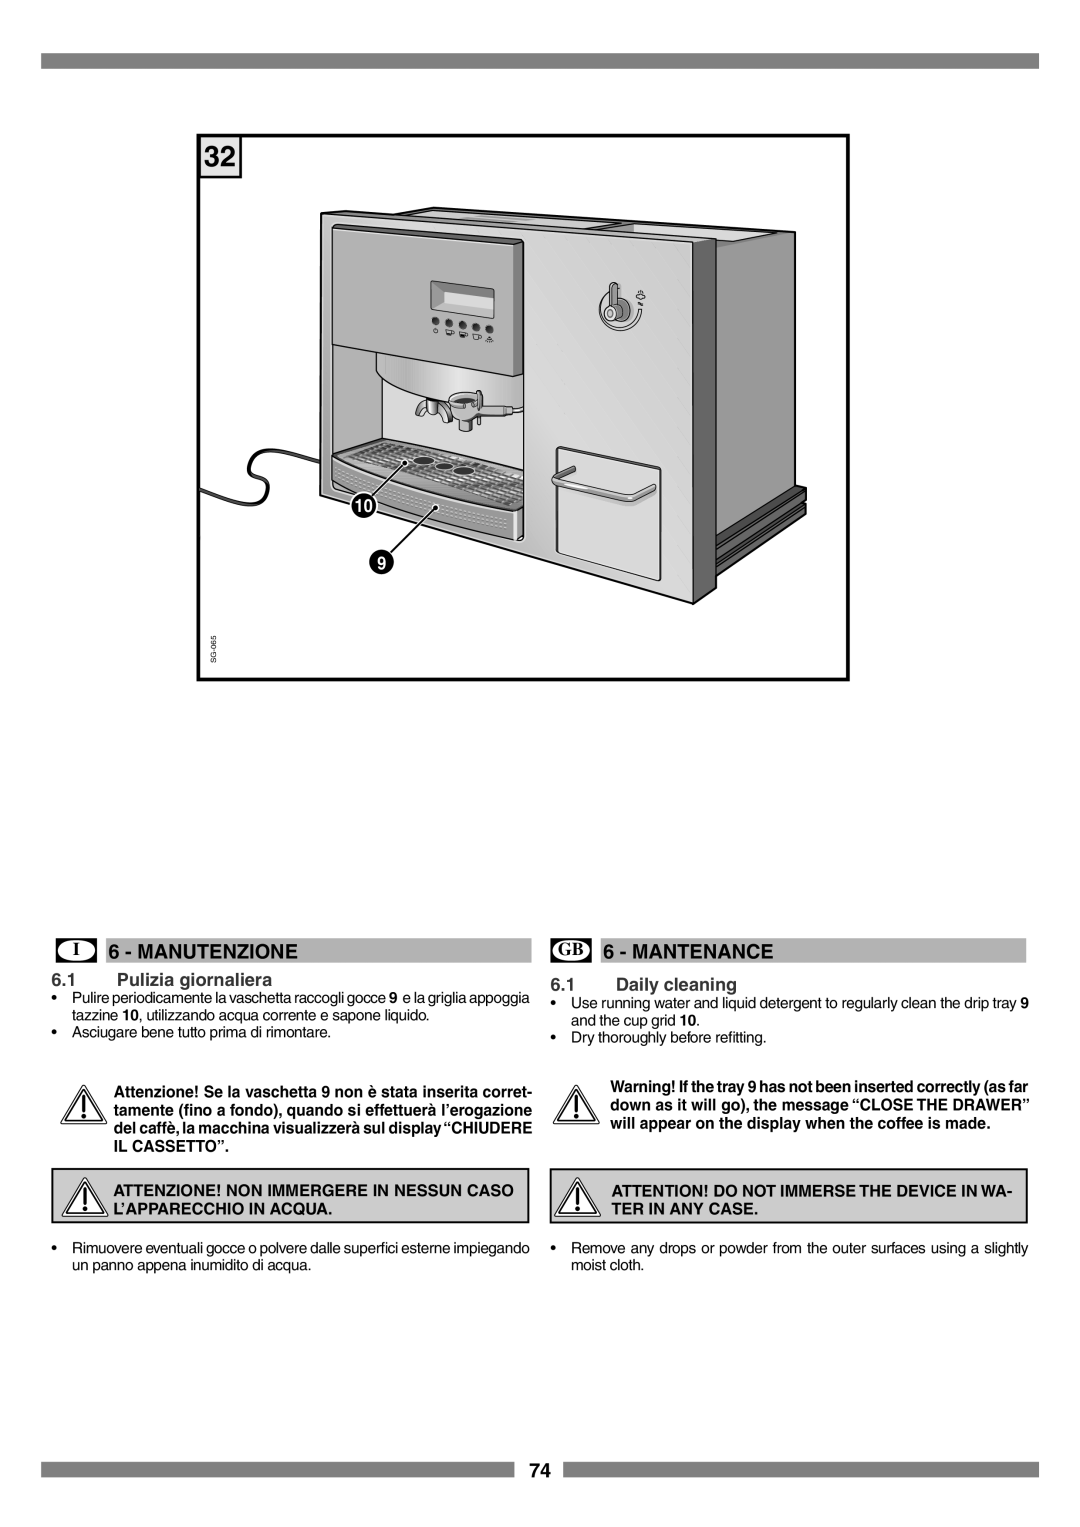 Smeg SCM1 manual I 6 - MANUTENZIONE, GB 6 - MANTENANCE, Pulizia giornaliera, Daily cleaning 